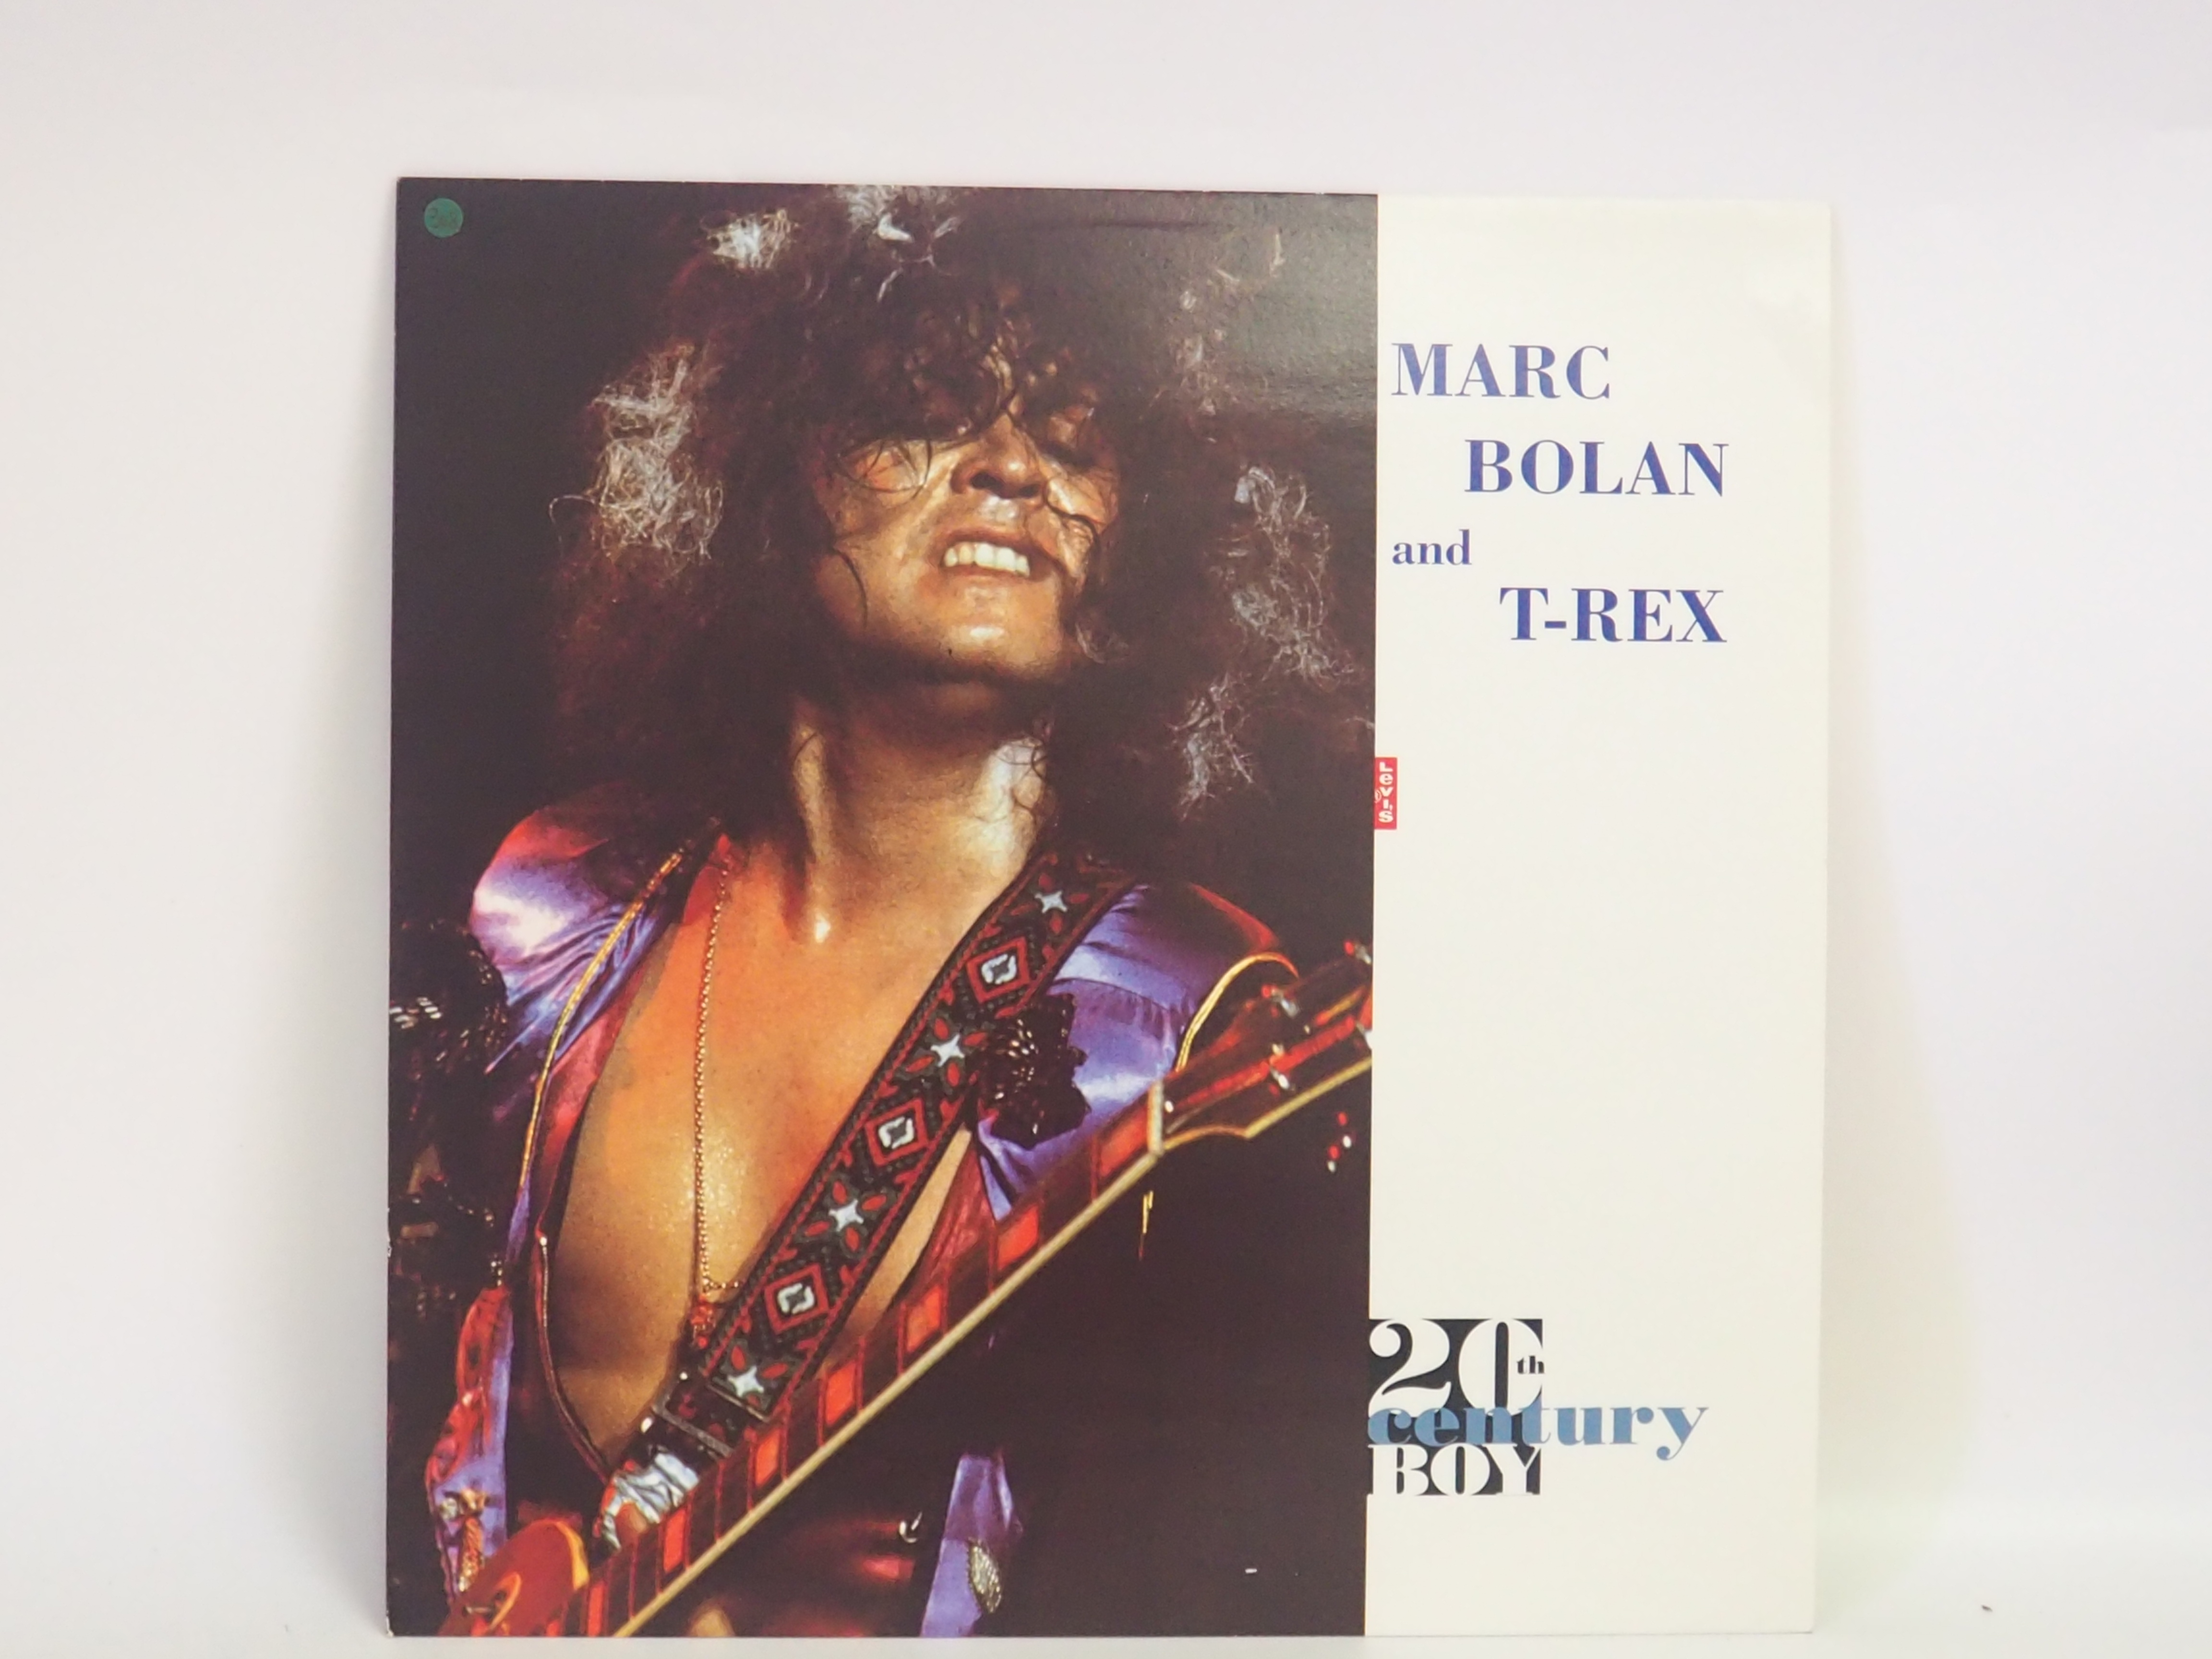 Marc Bolan and T-Rex - 20th Century Boy 12" Single